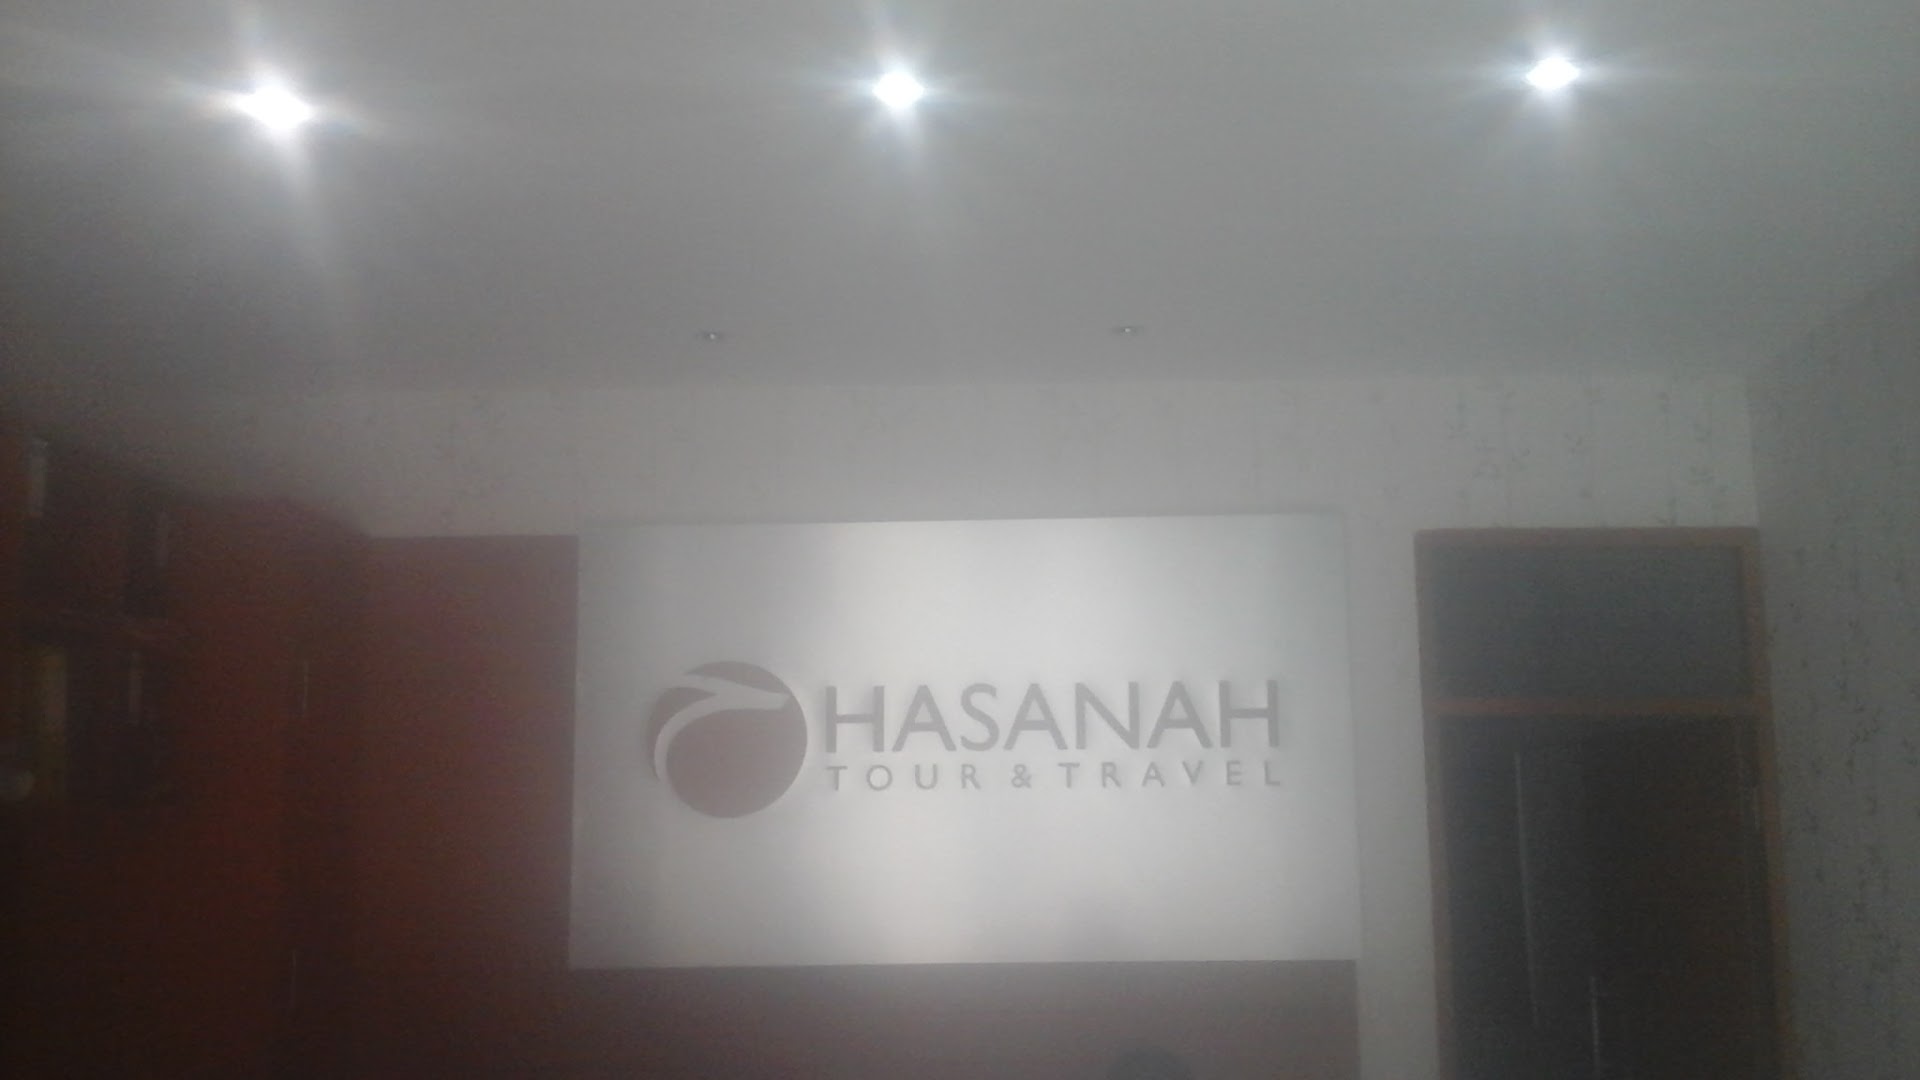 Gambar Hasanah Tour & Travel